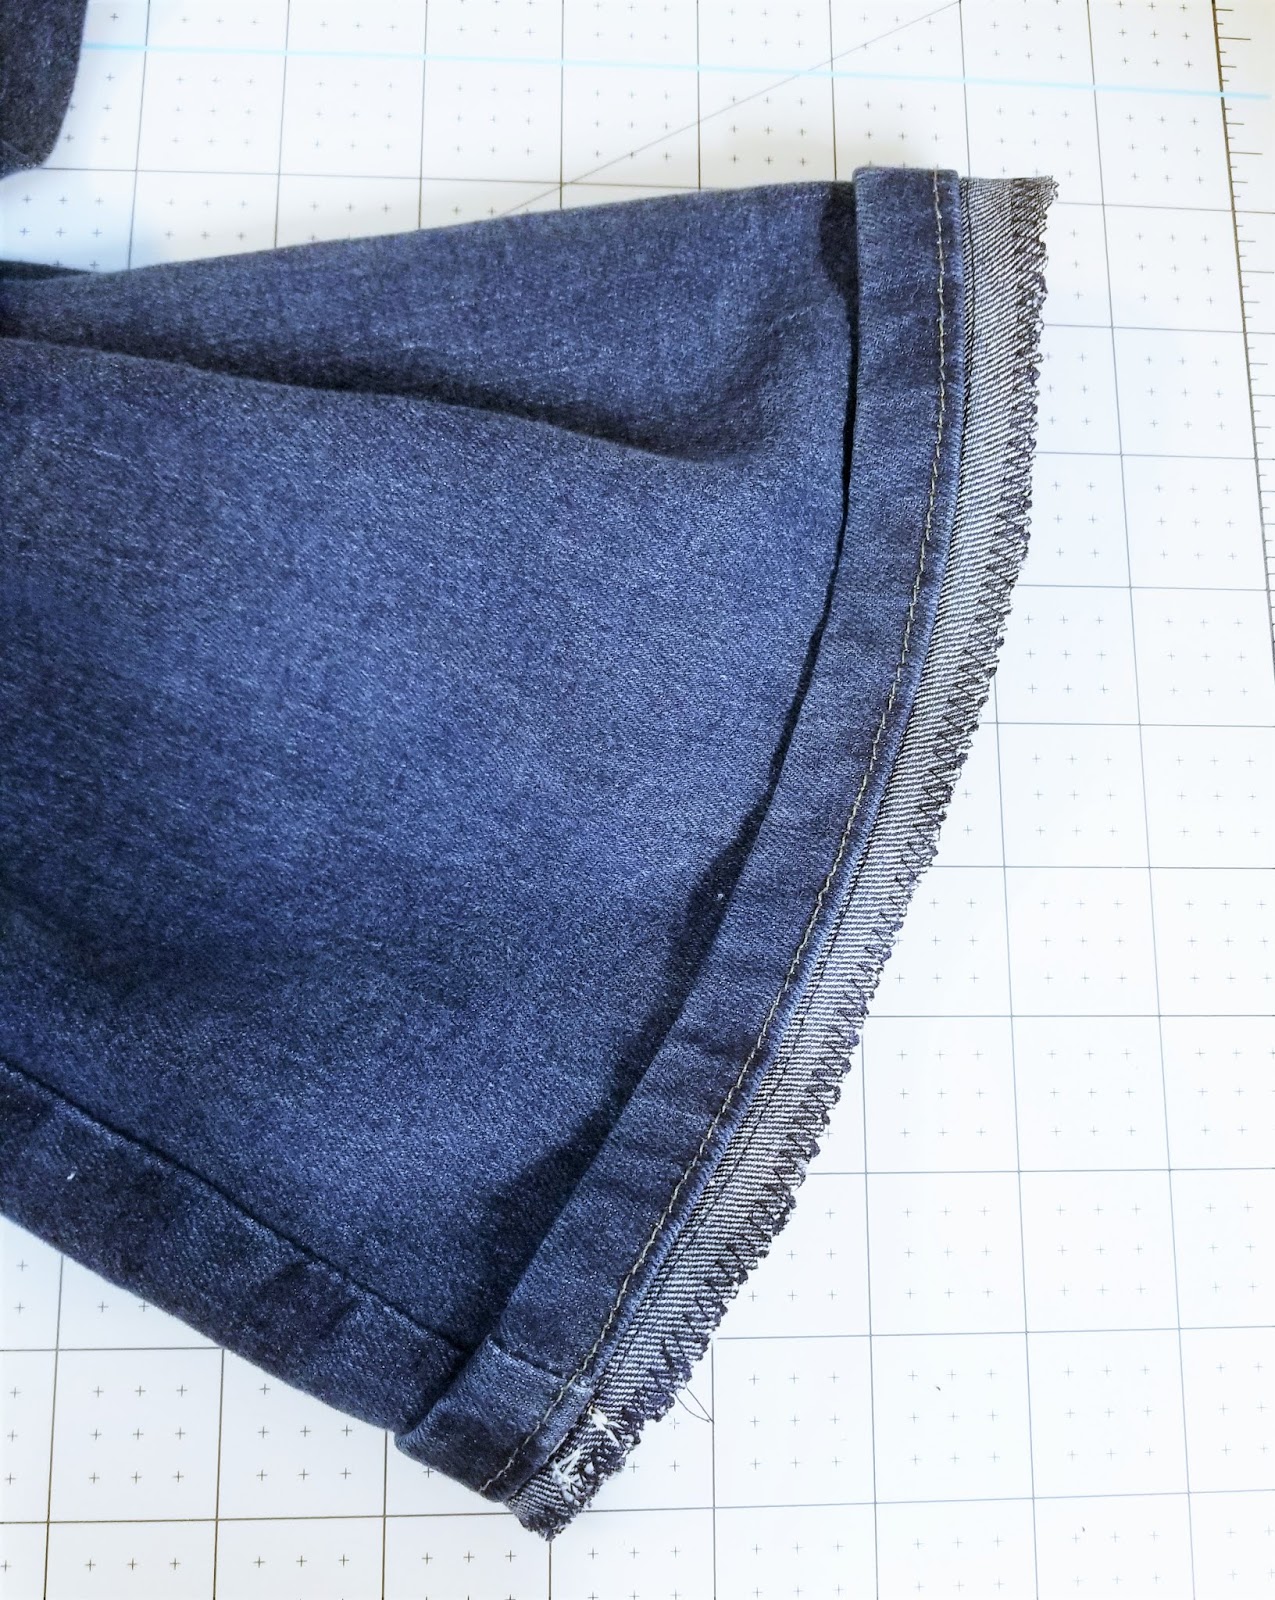 How to Hem Jeans with Original Hem | Sew Simple Home